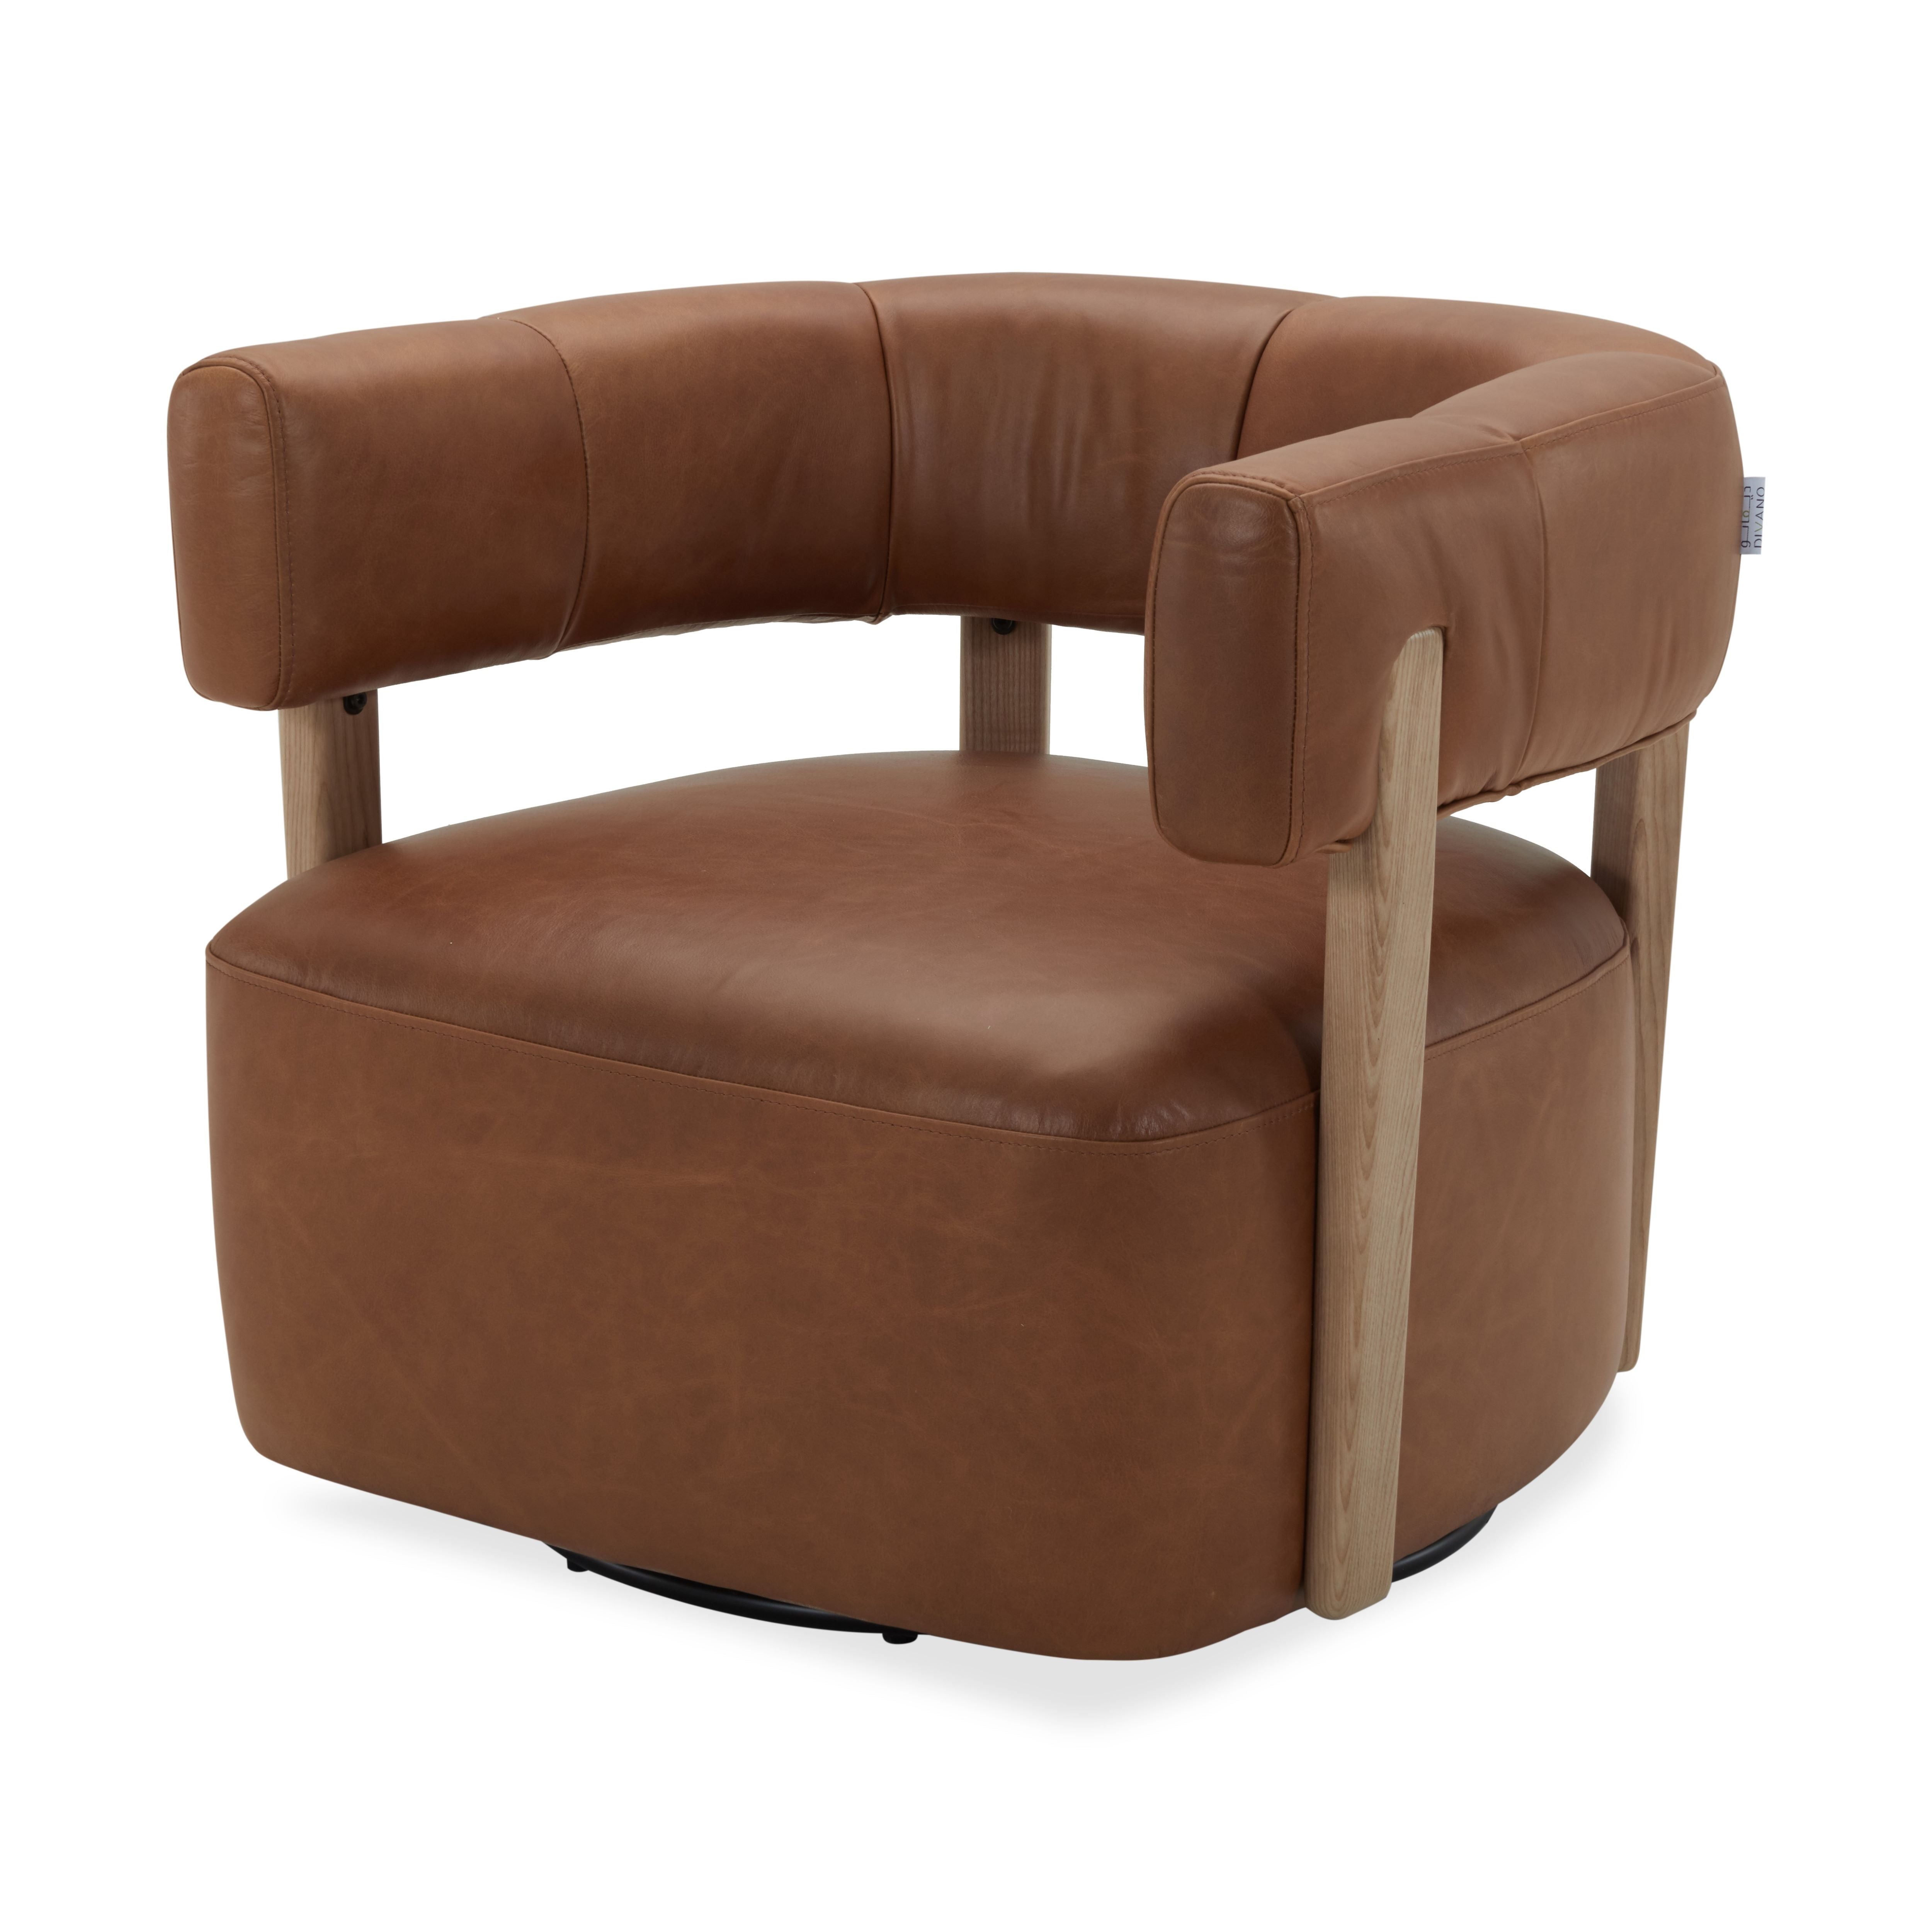 Swivel Chair - Brown